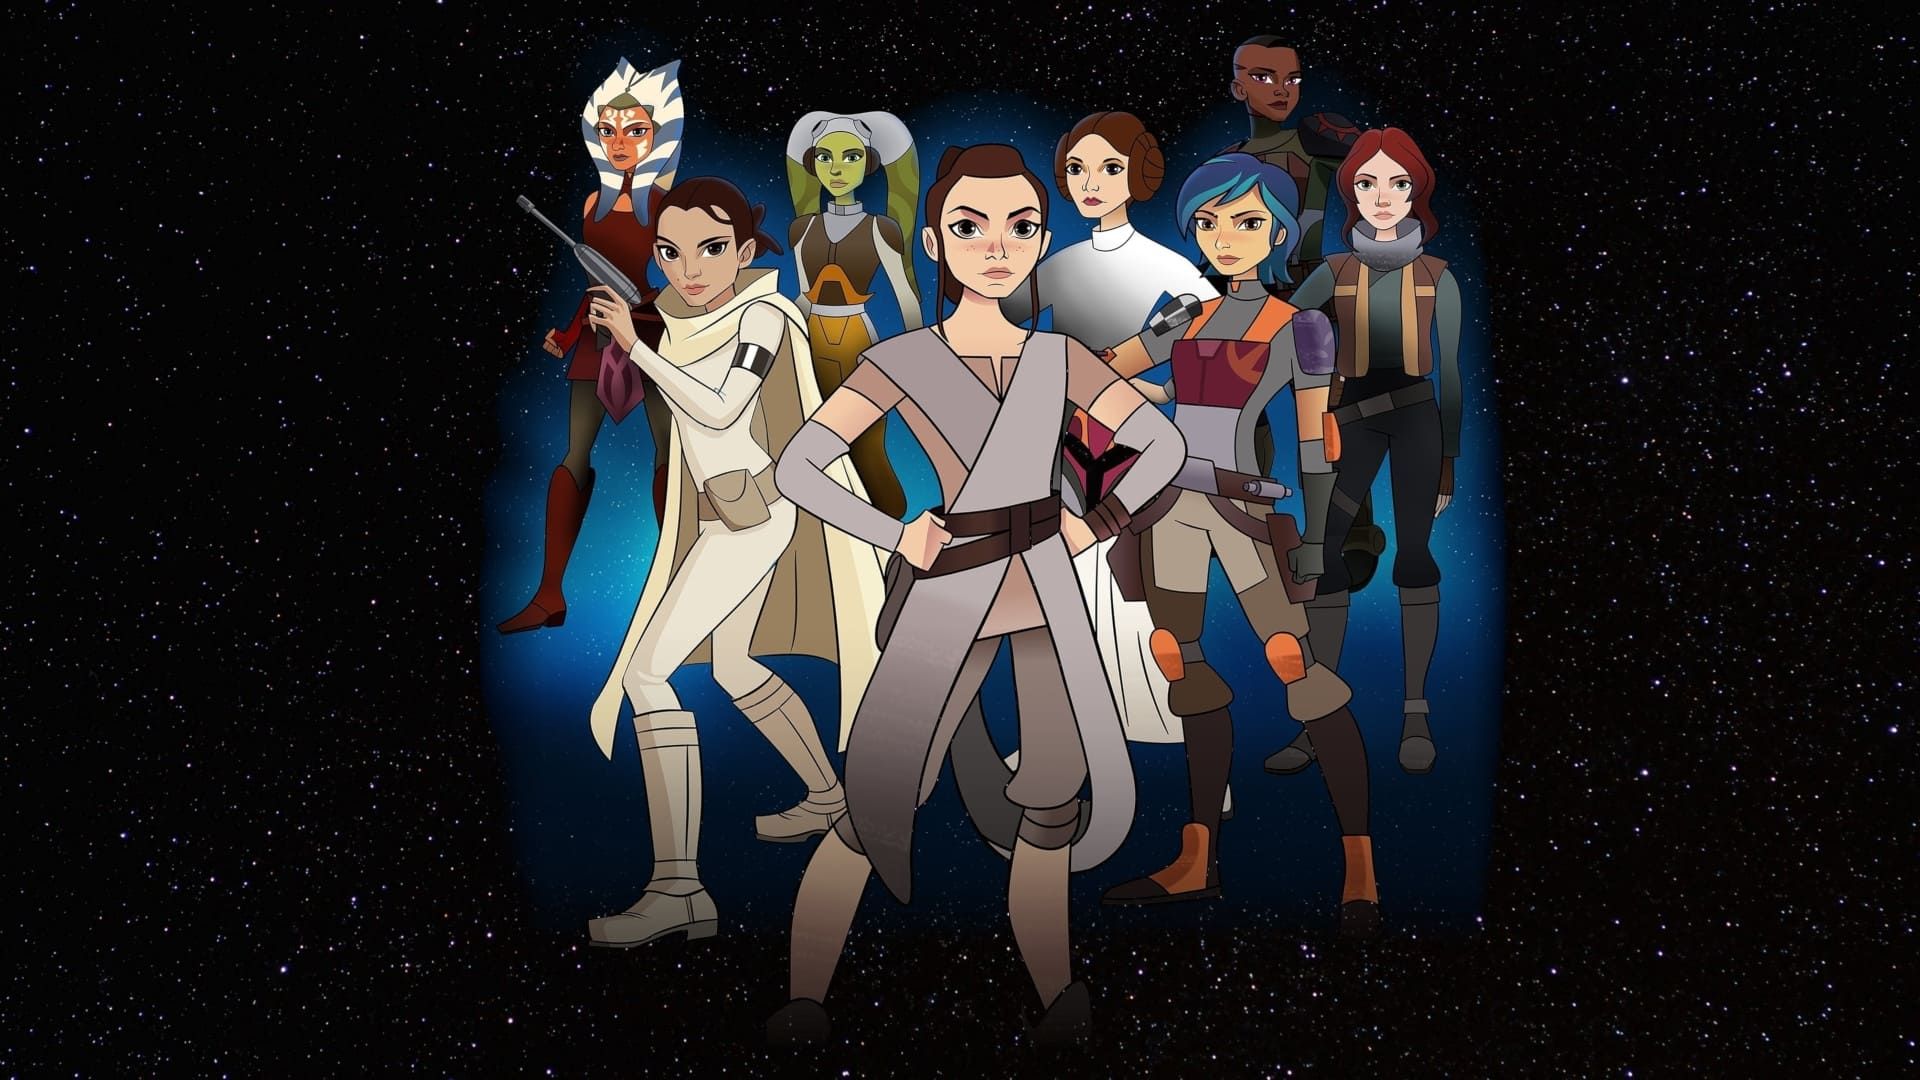 Star Wars: Forces of Destiny background